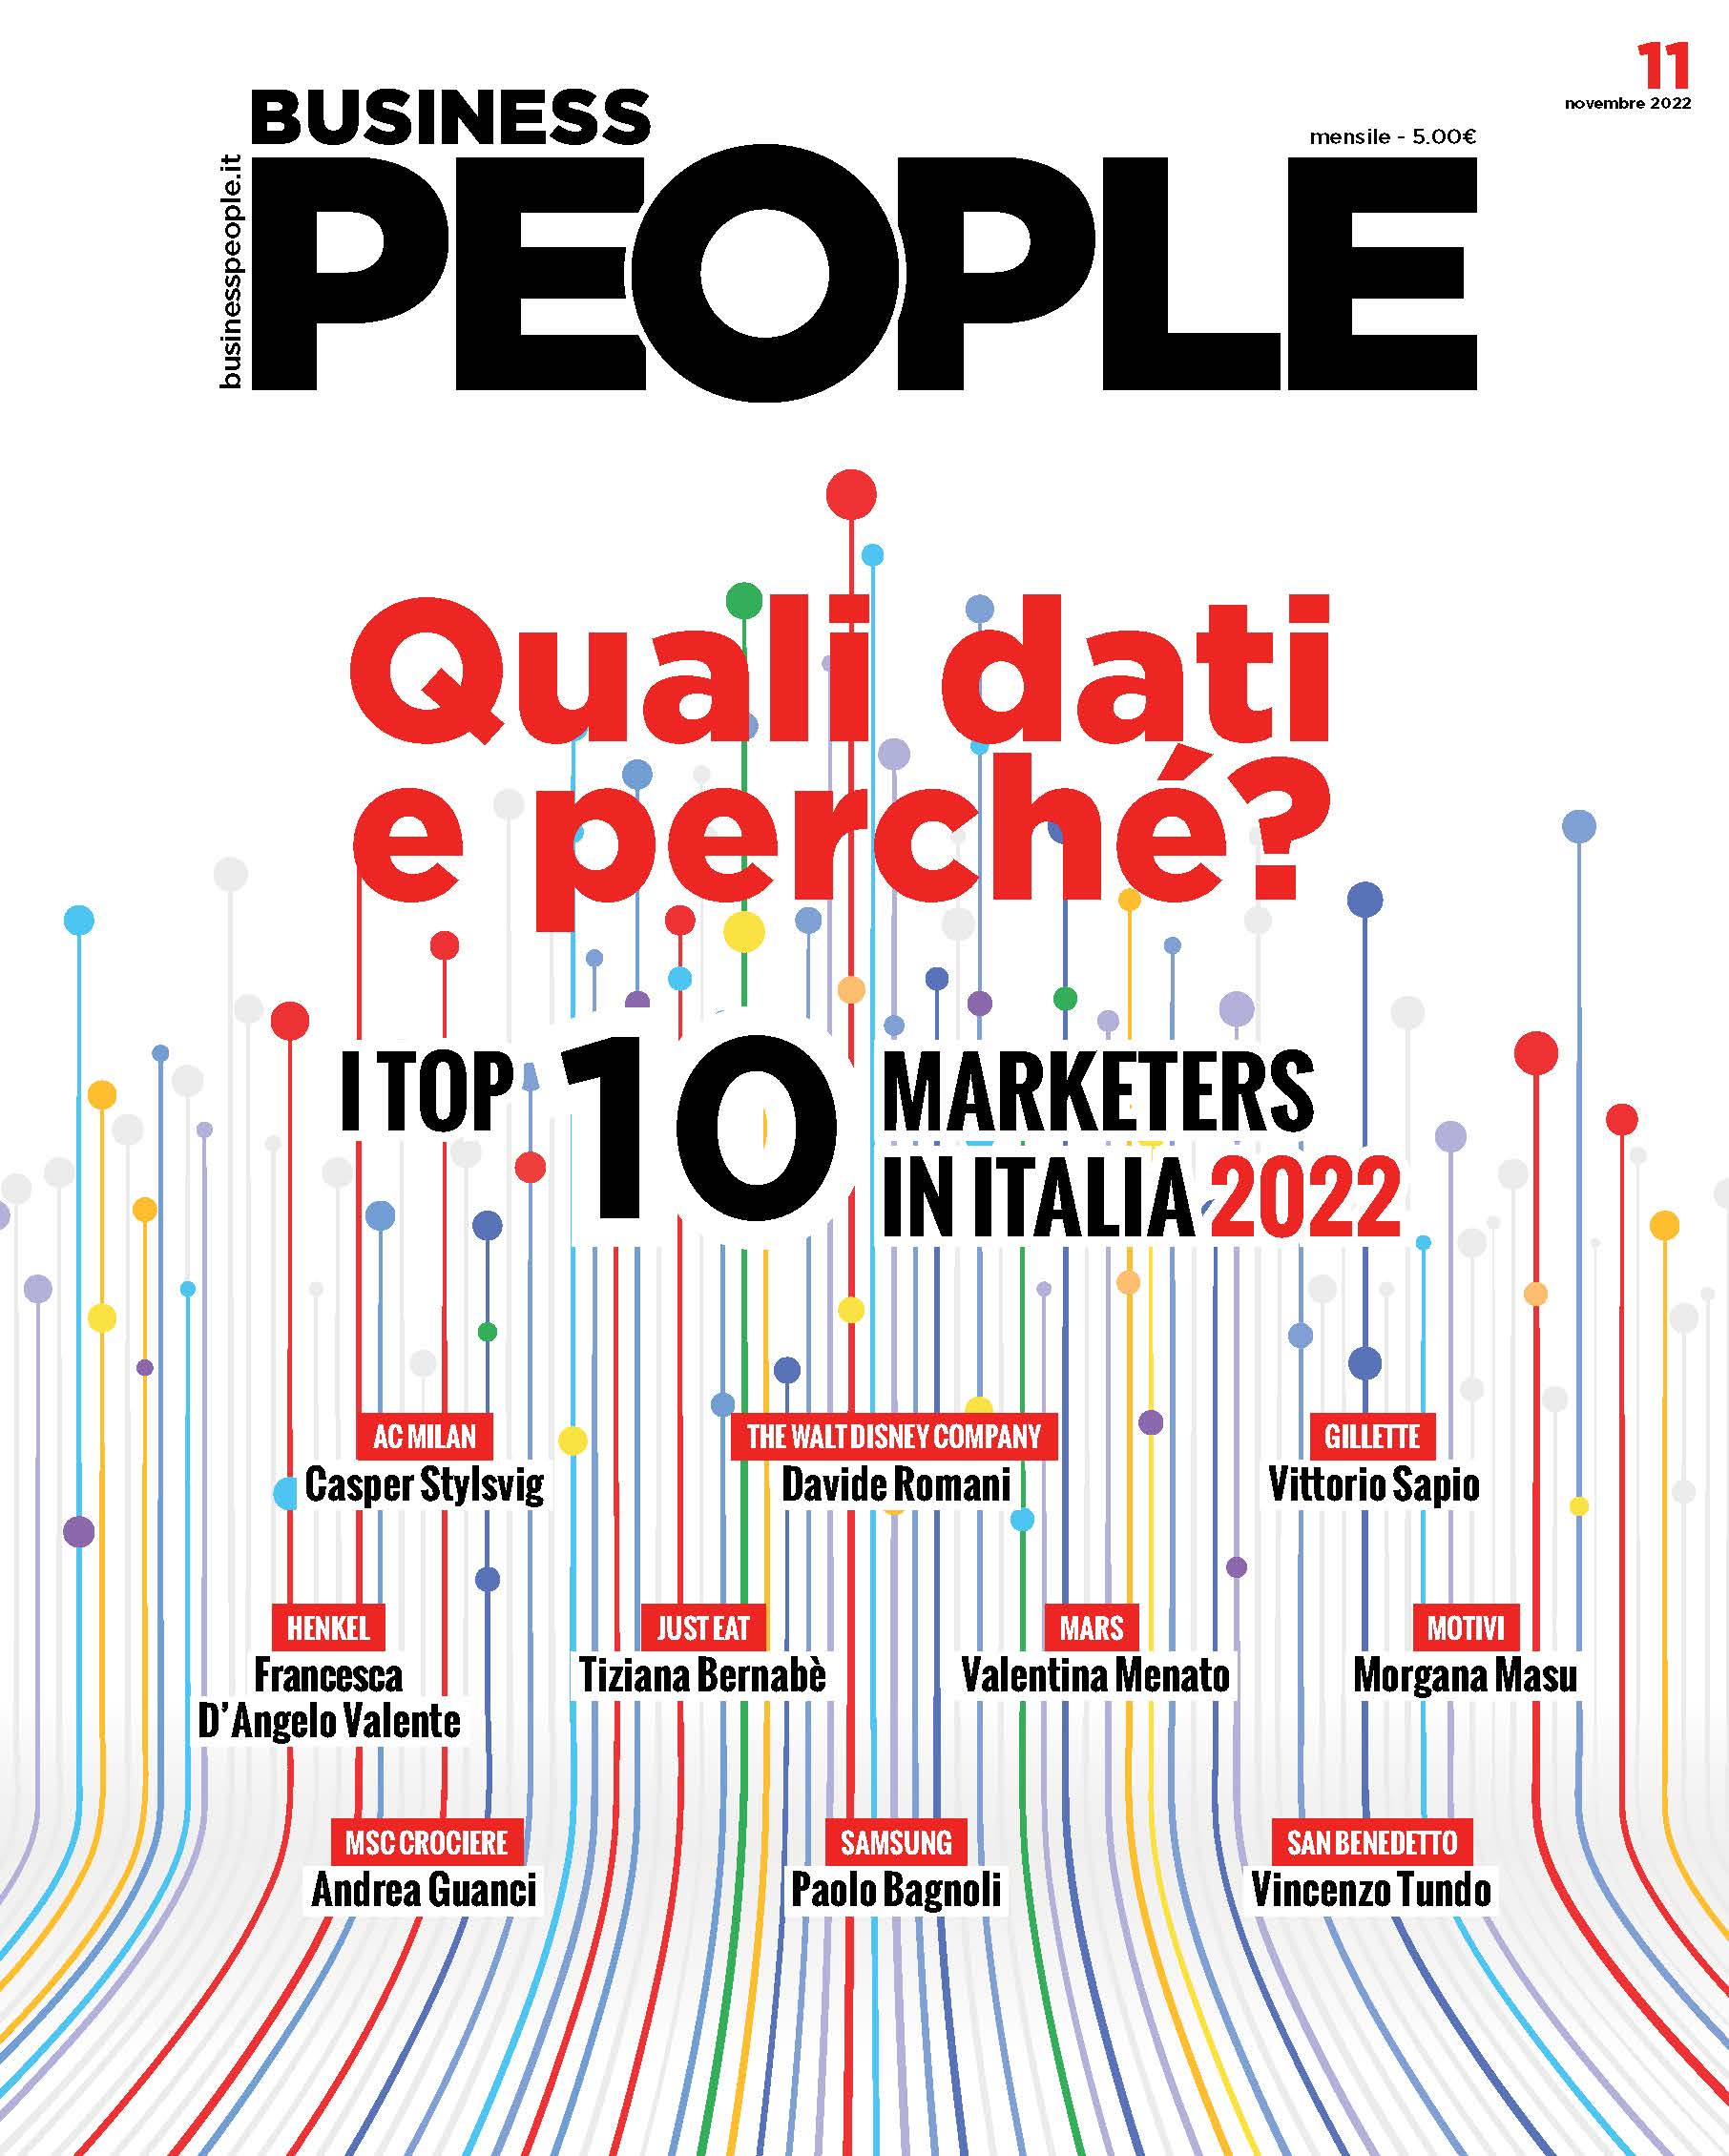 Su Business People i Top 10 Marketers in Italia 2022